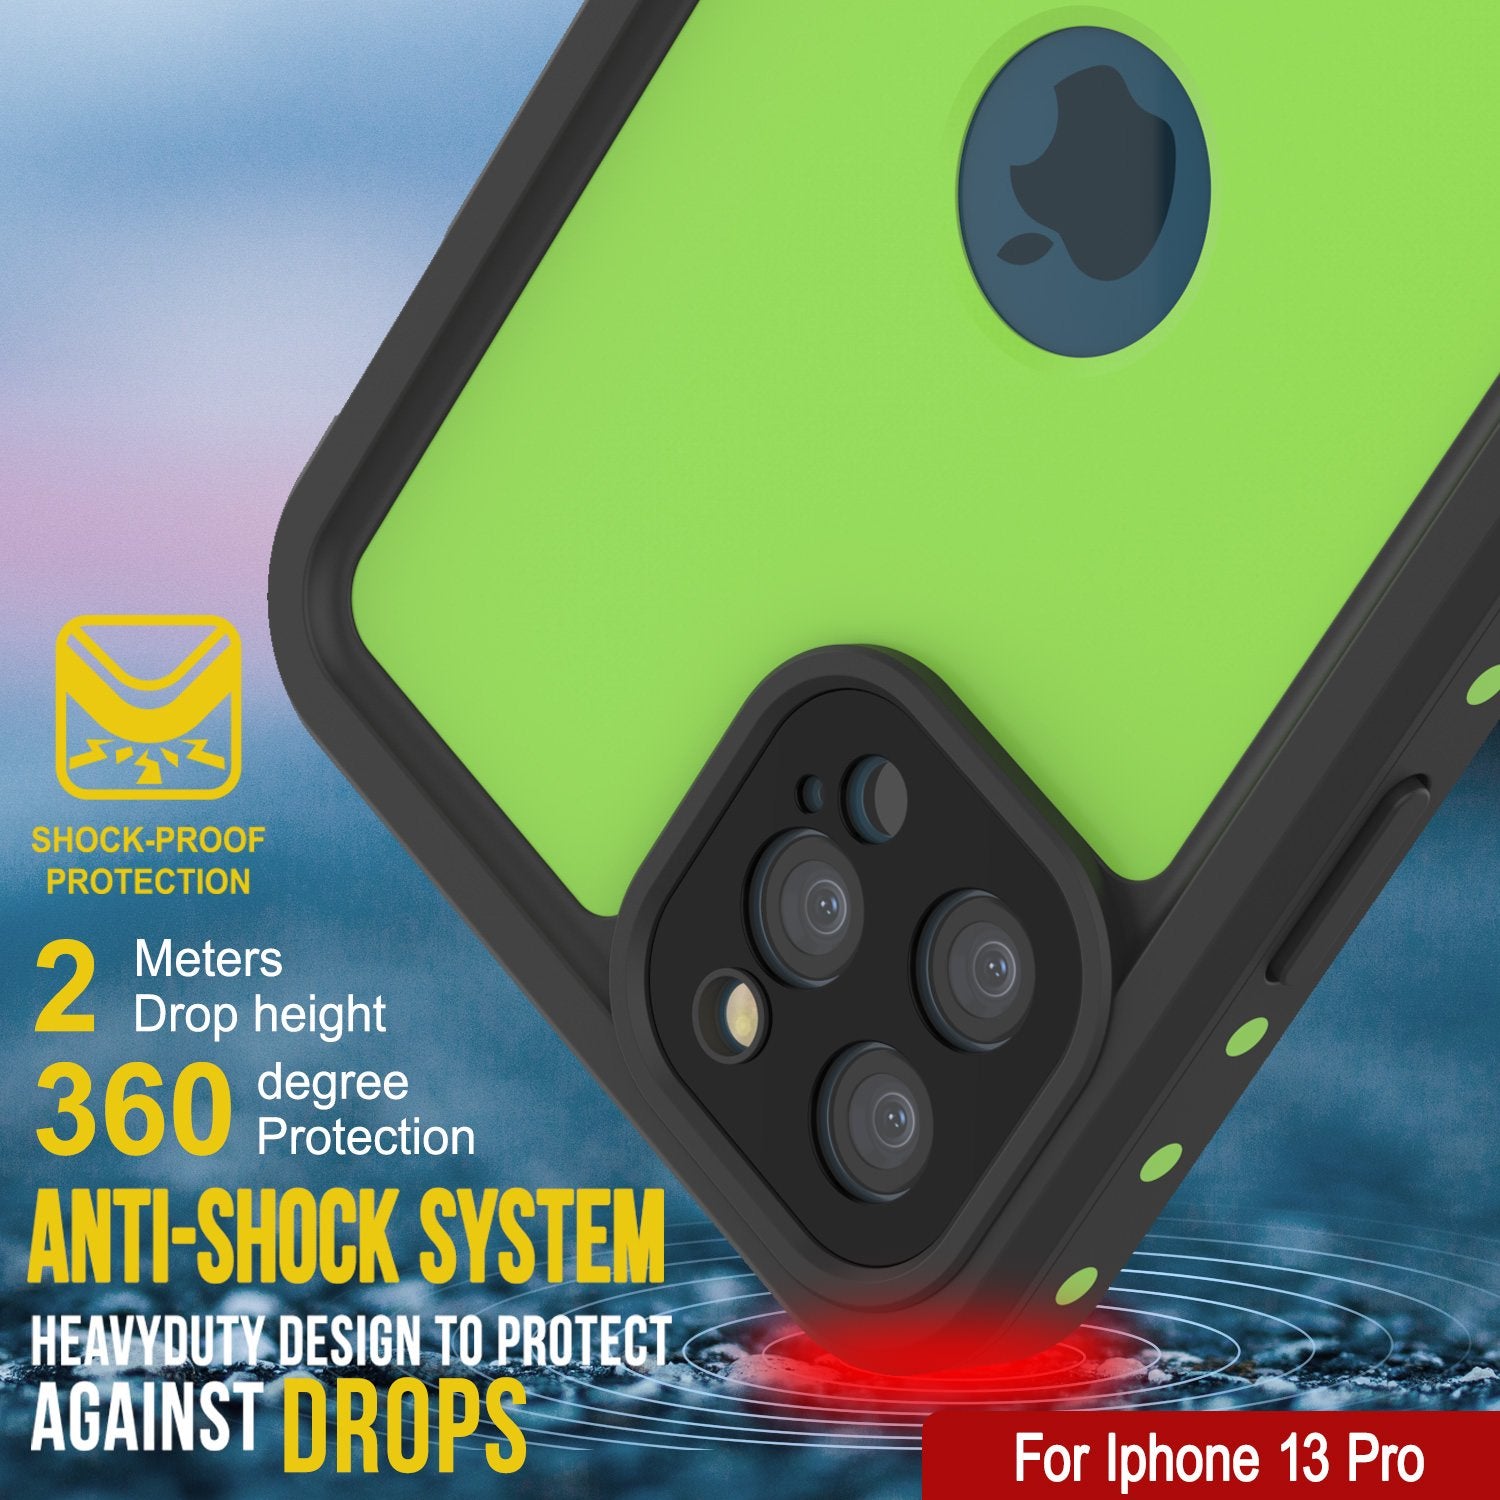 iPhone 13 Pro Waterproof IP68 Case, Punkcase [Light green] [StudStar Series] [Slim Fit] [Dirtproof]